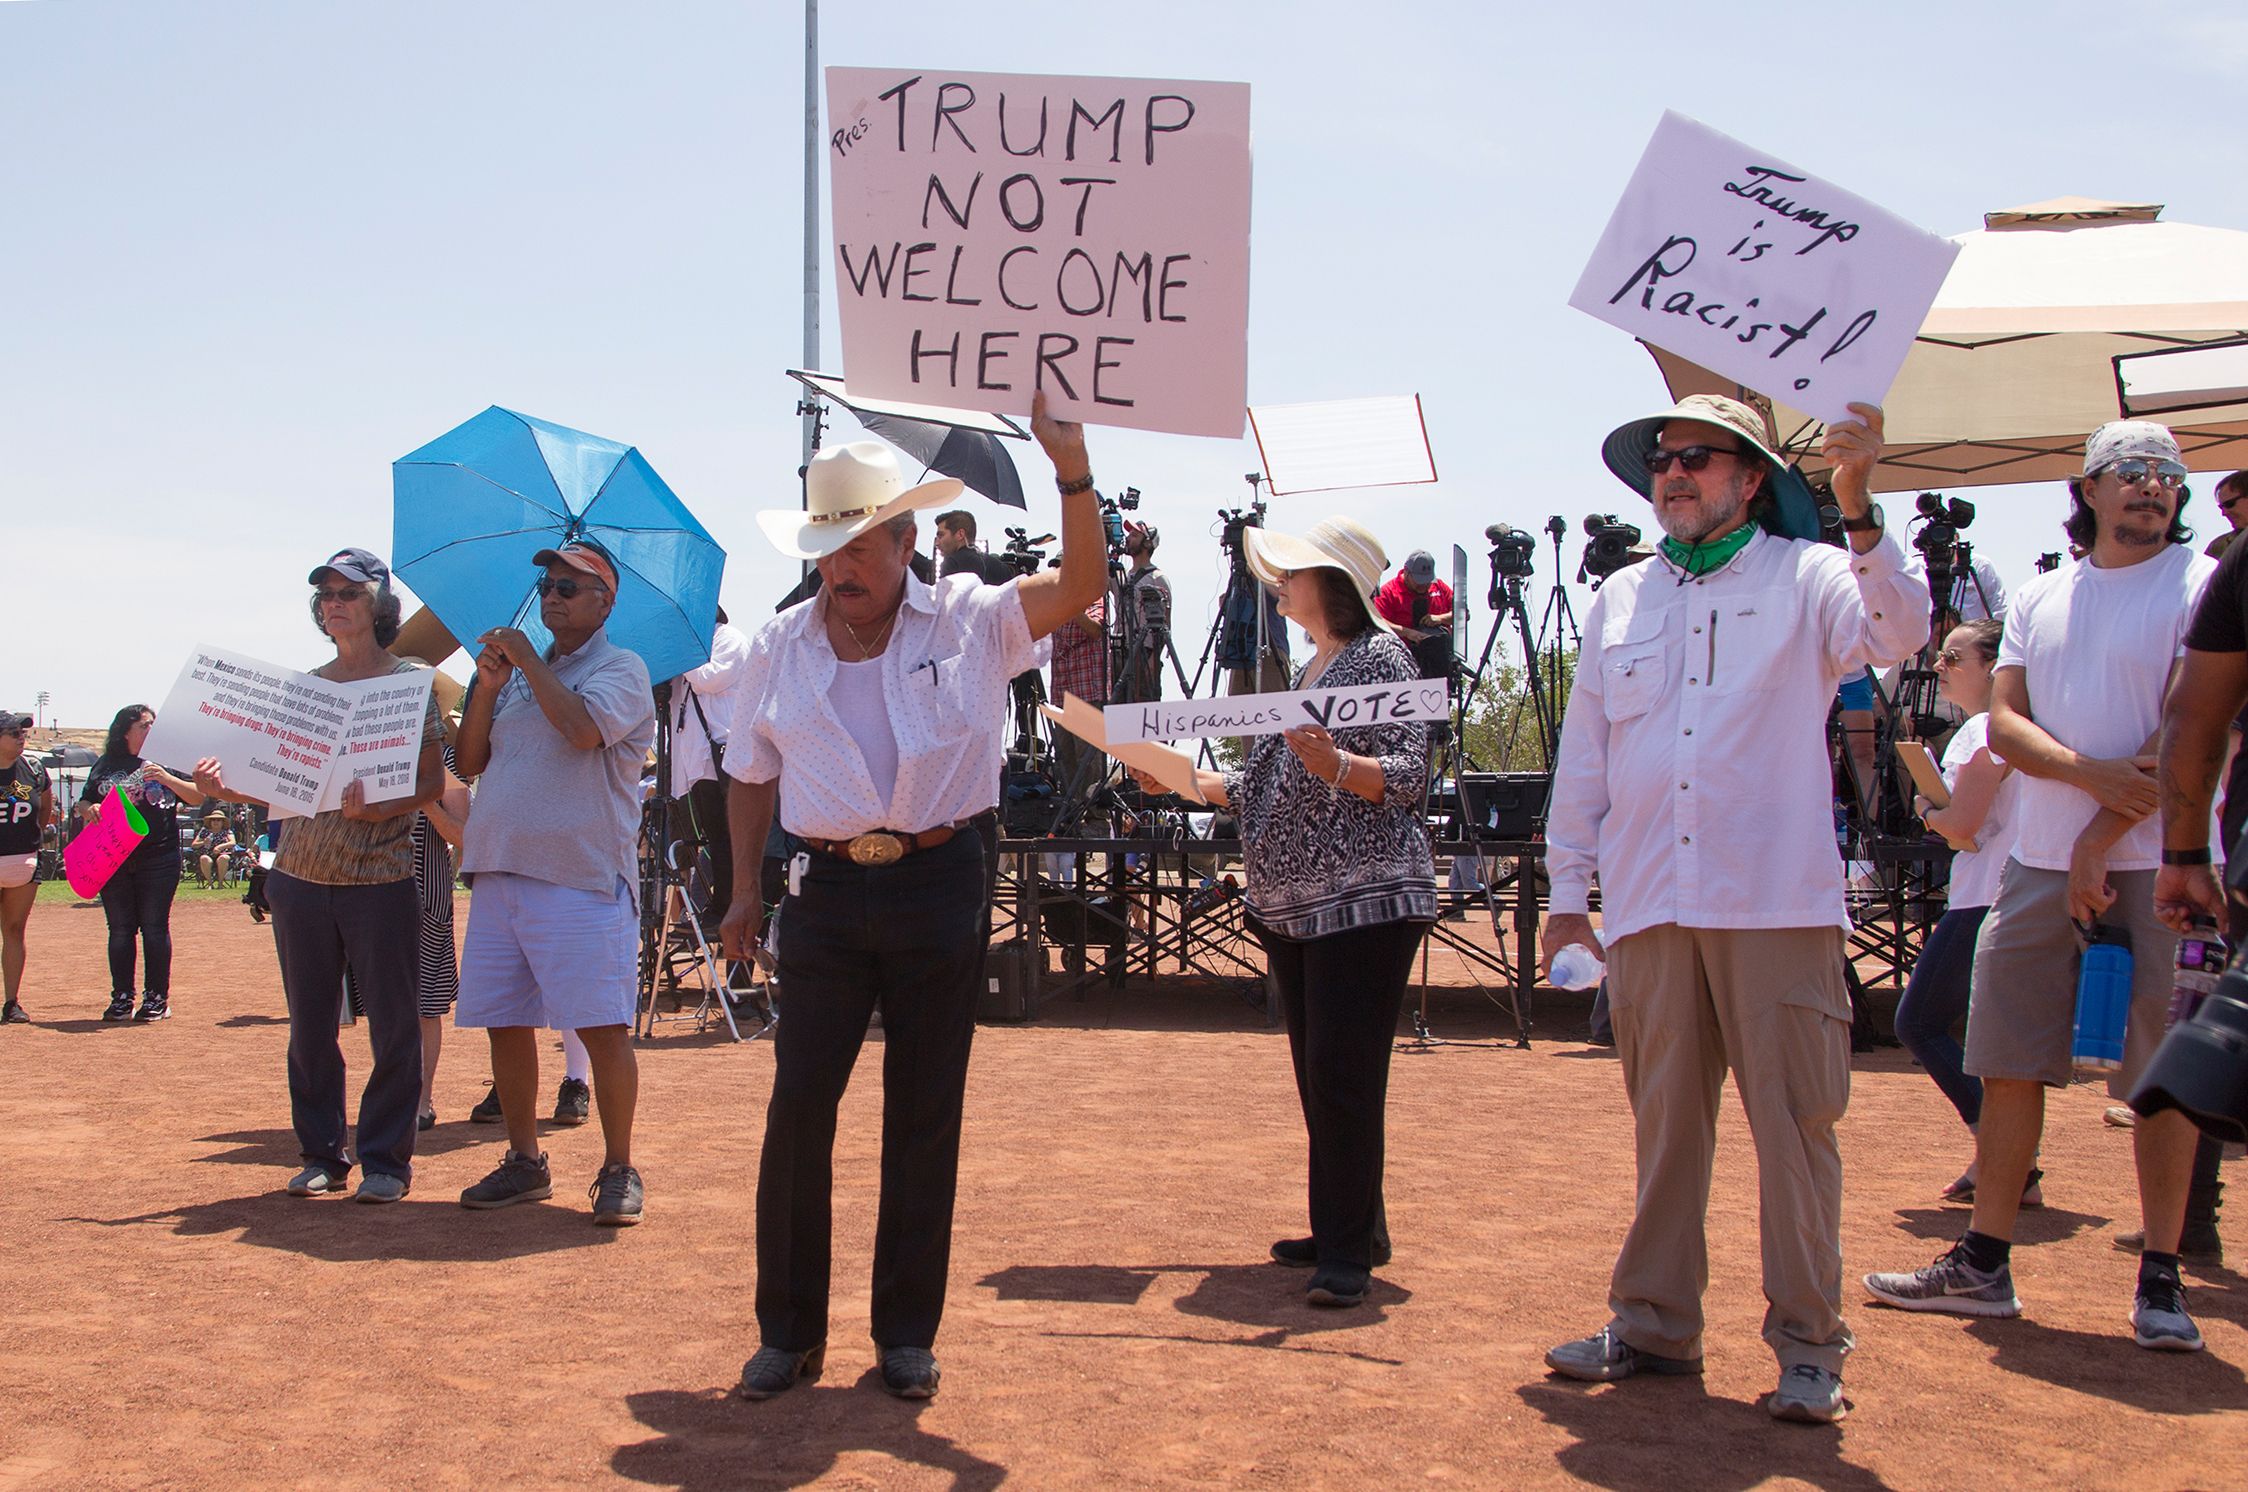 El Paso Demonstrators protest against the visit of US President Trump